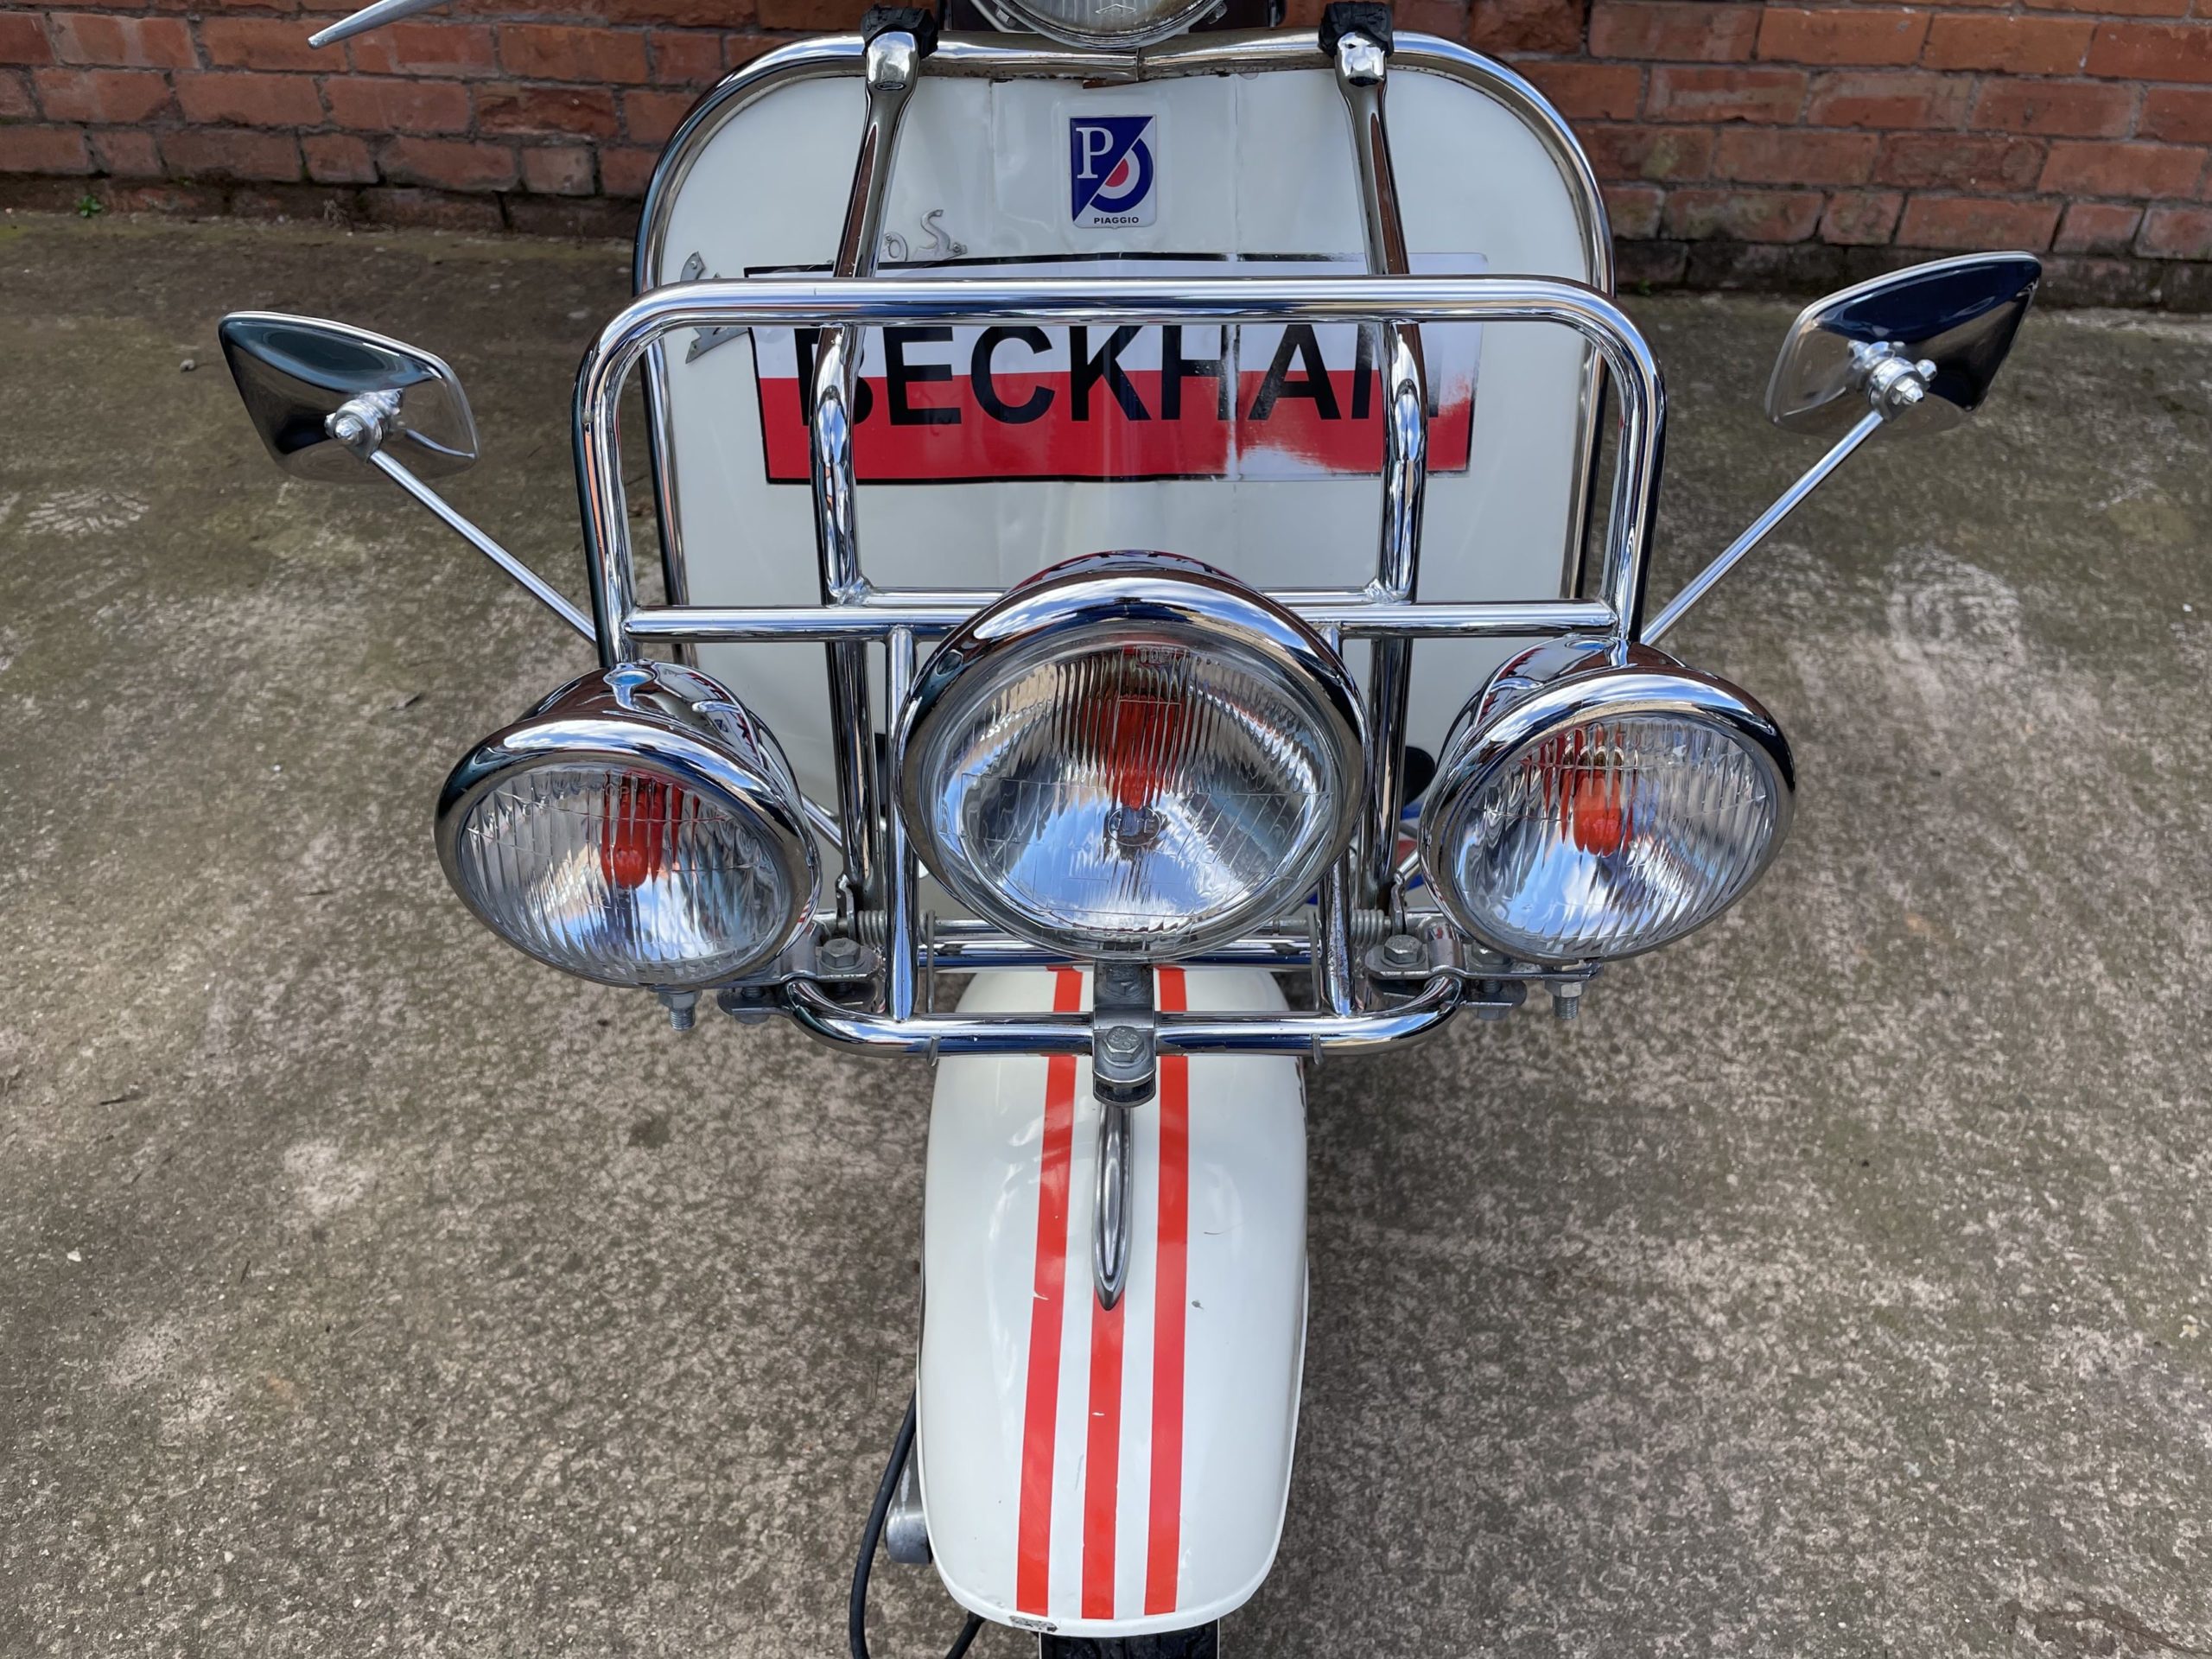 David Beckham's Motovespa England Scooter Is For Sale